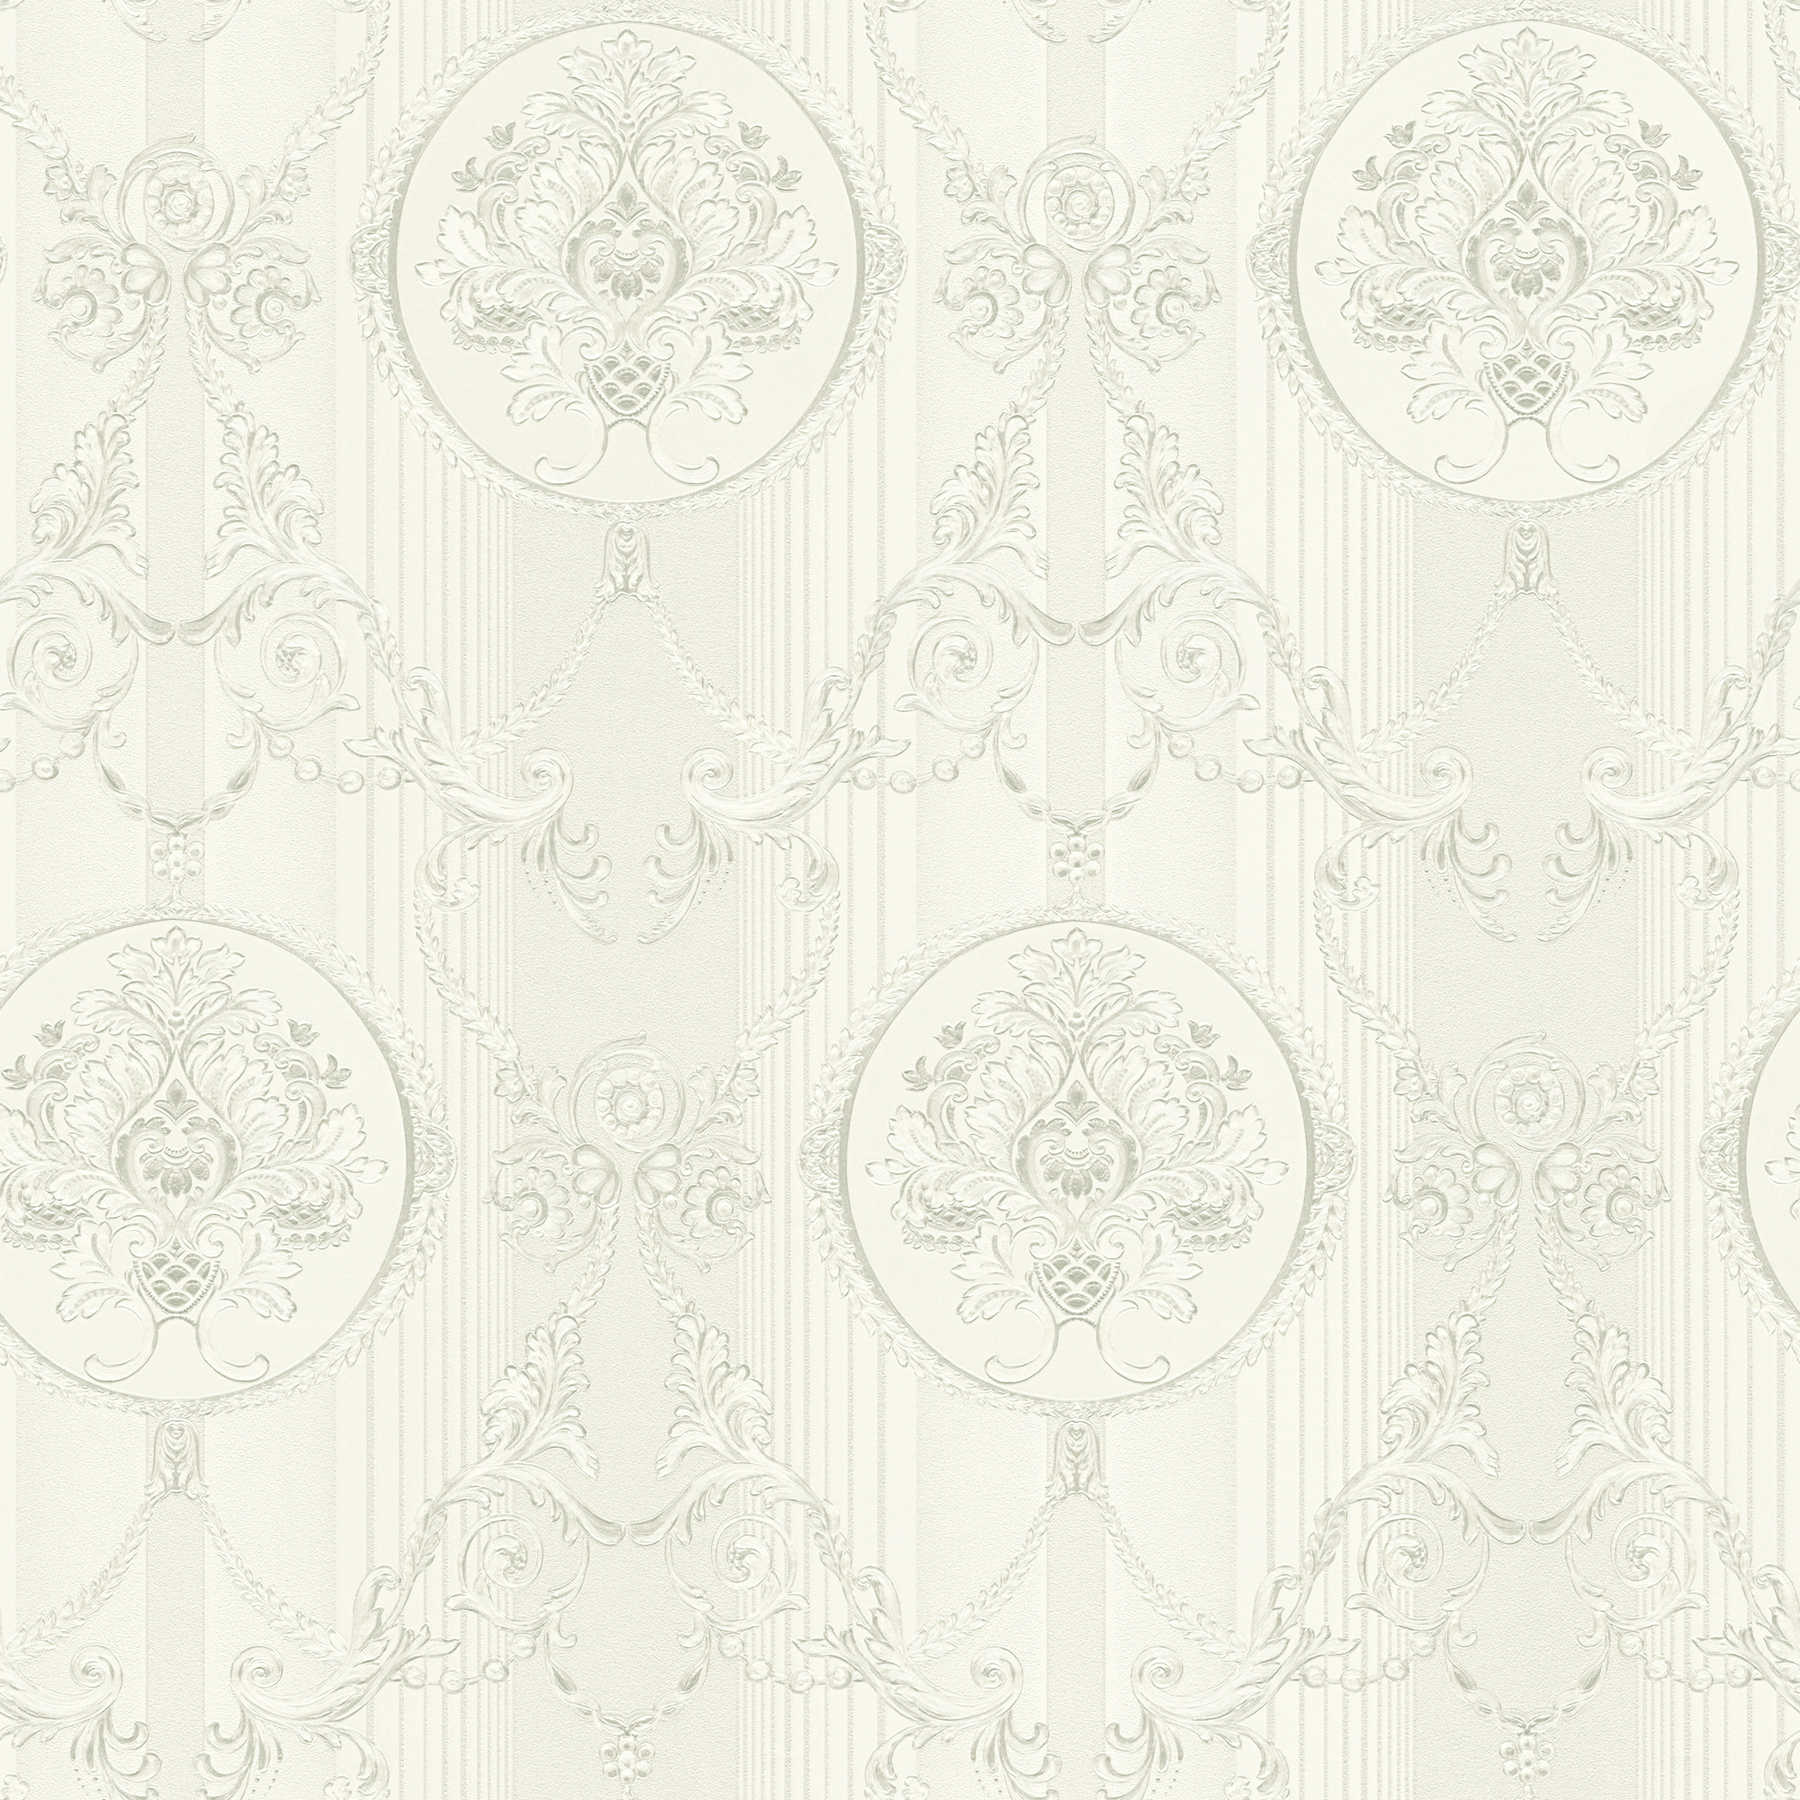 Neo baroque wallpaper with ornament design & metallic effect - metallic, white
